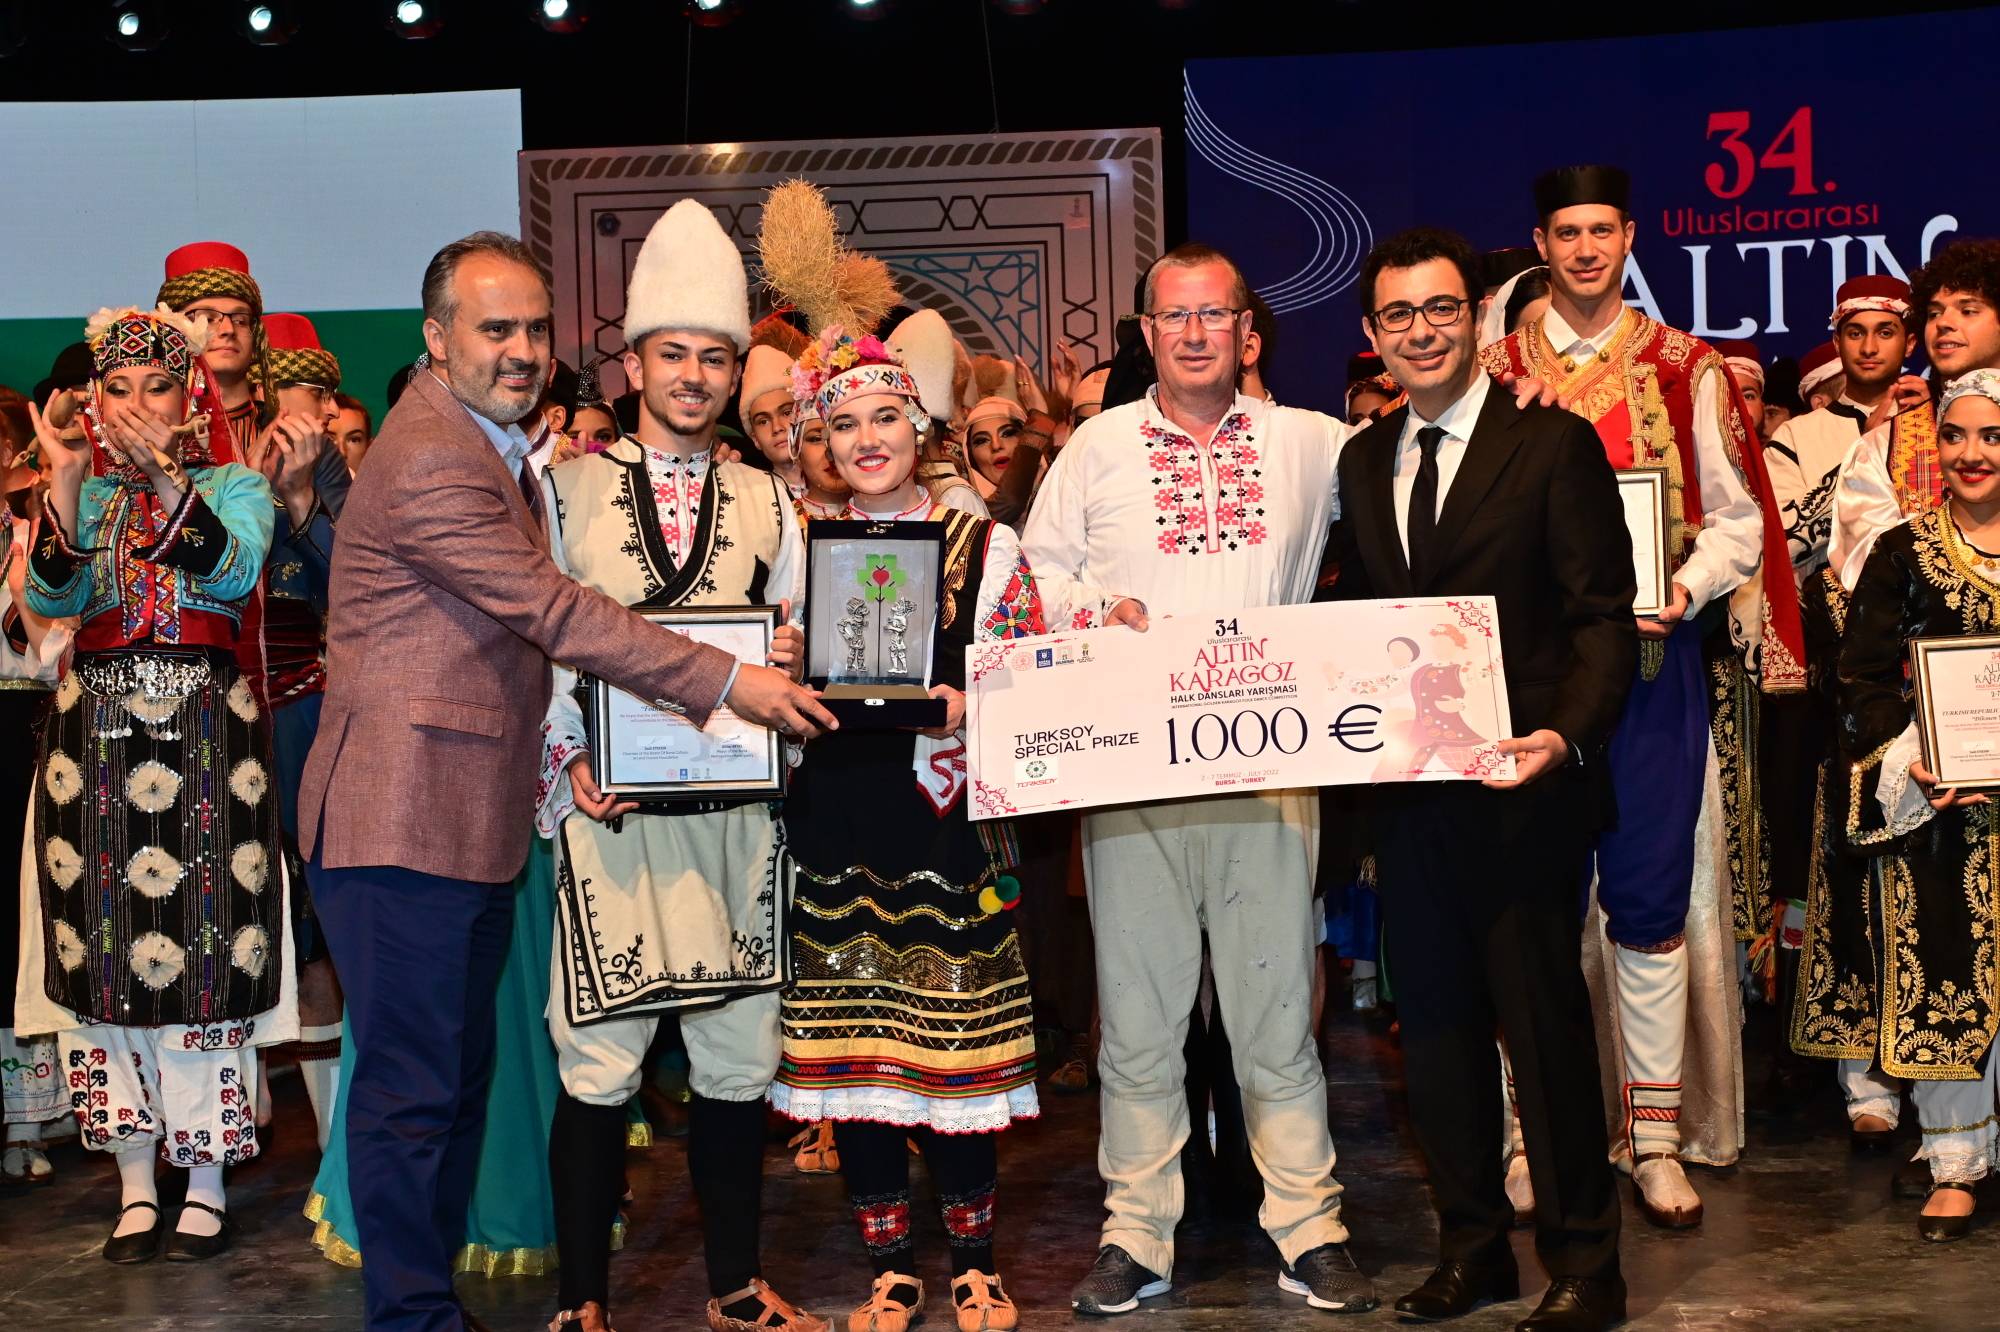 Споменателна награда - Mention Prize (1000 евро), получиха представителите на Унгария